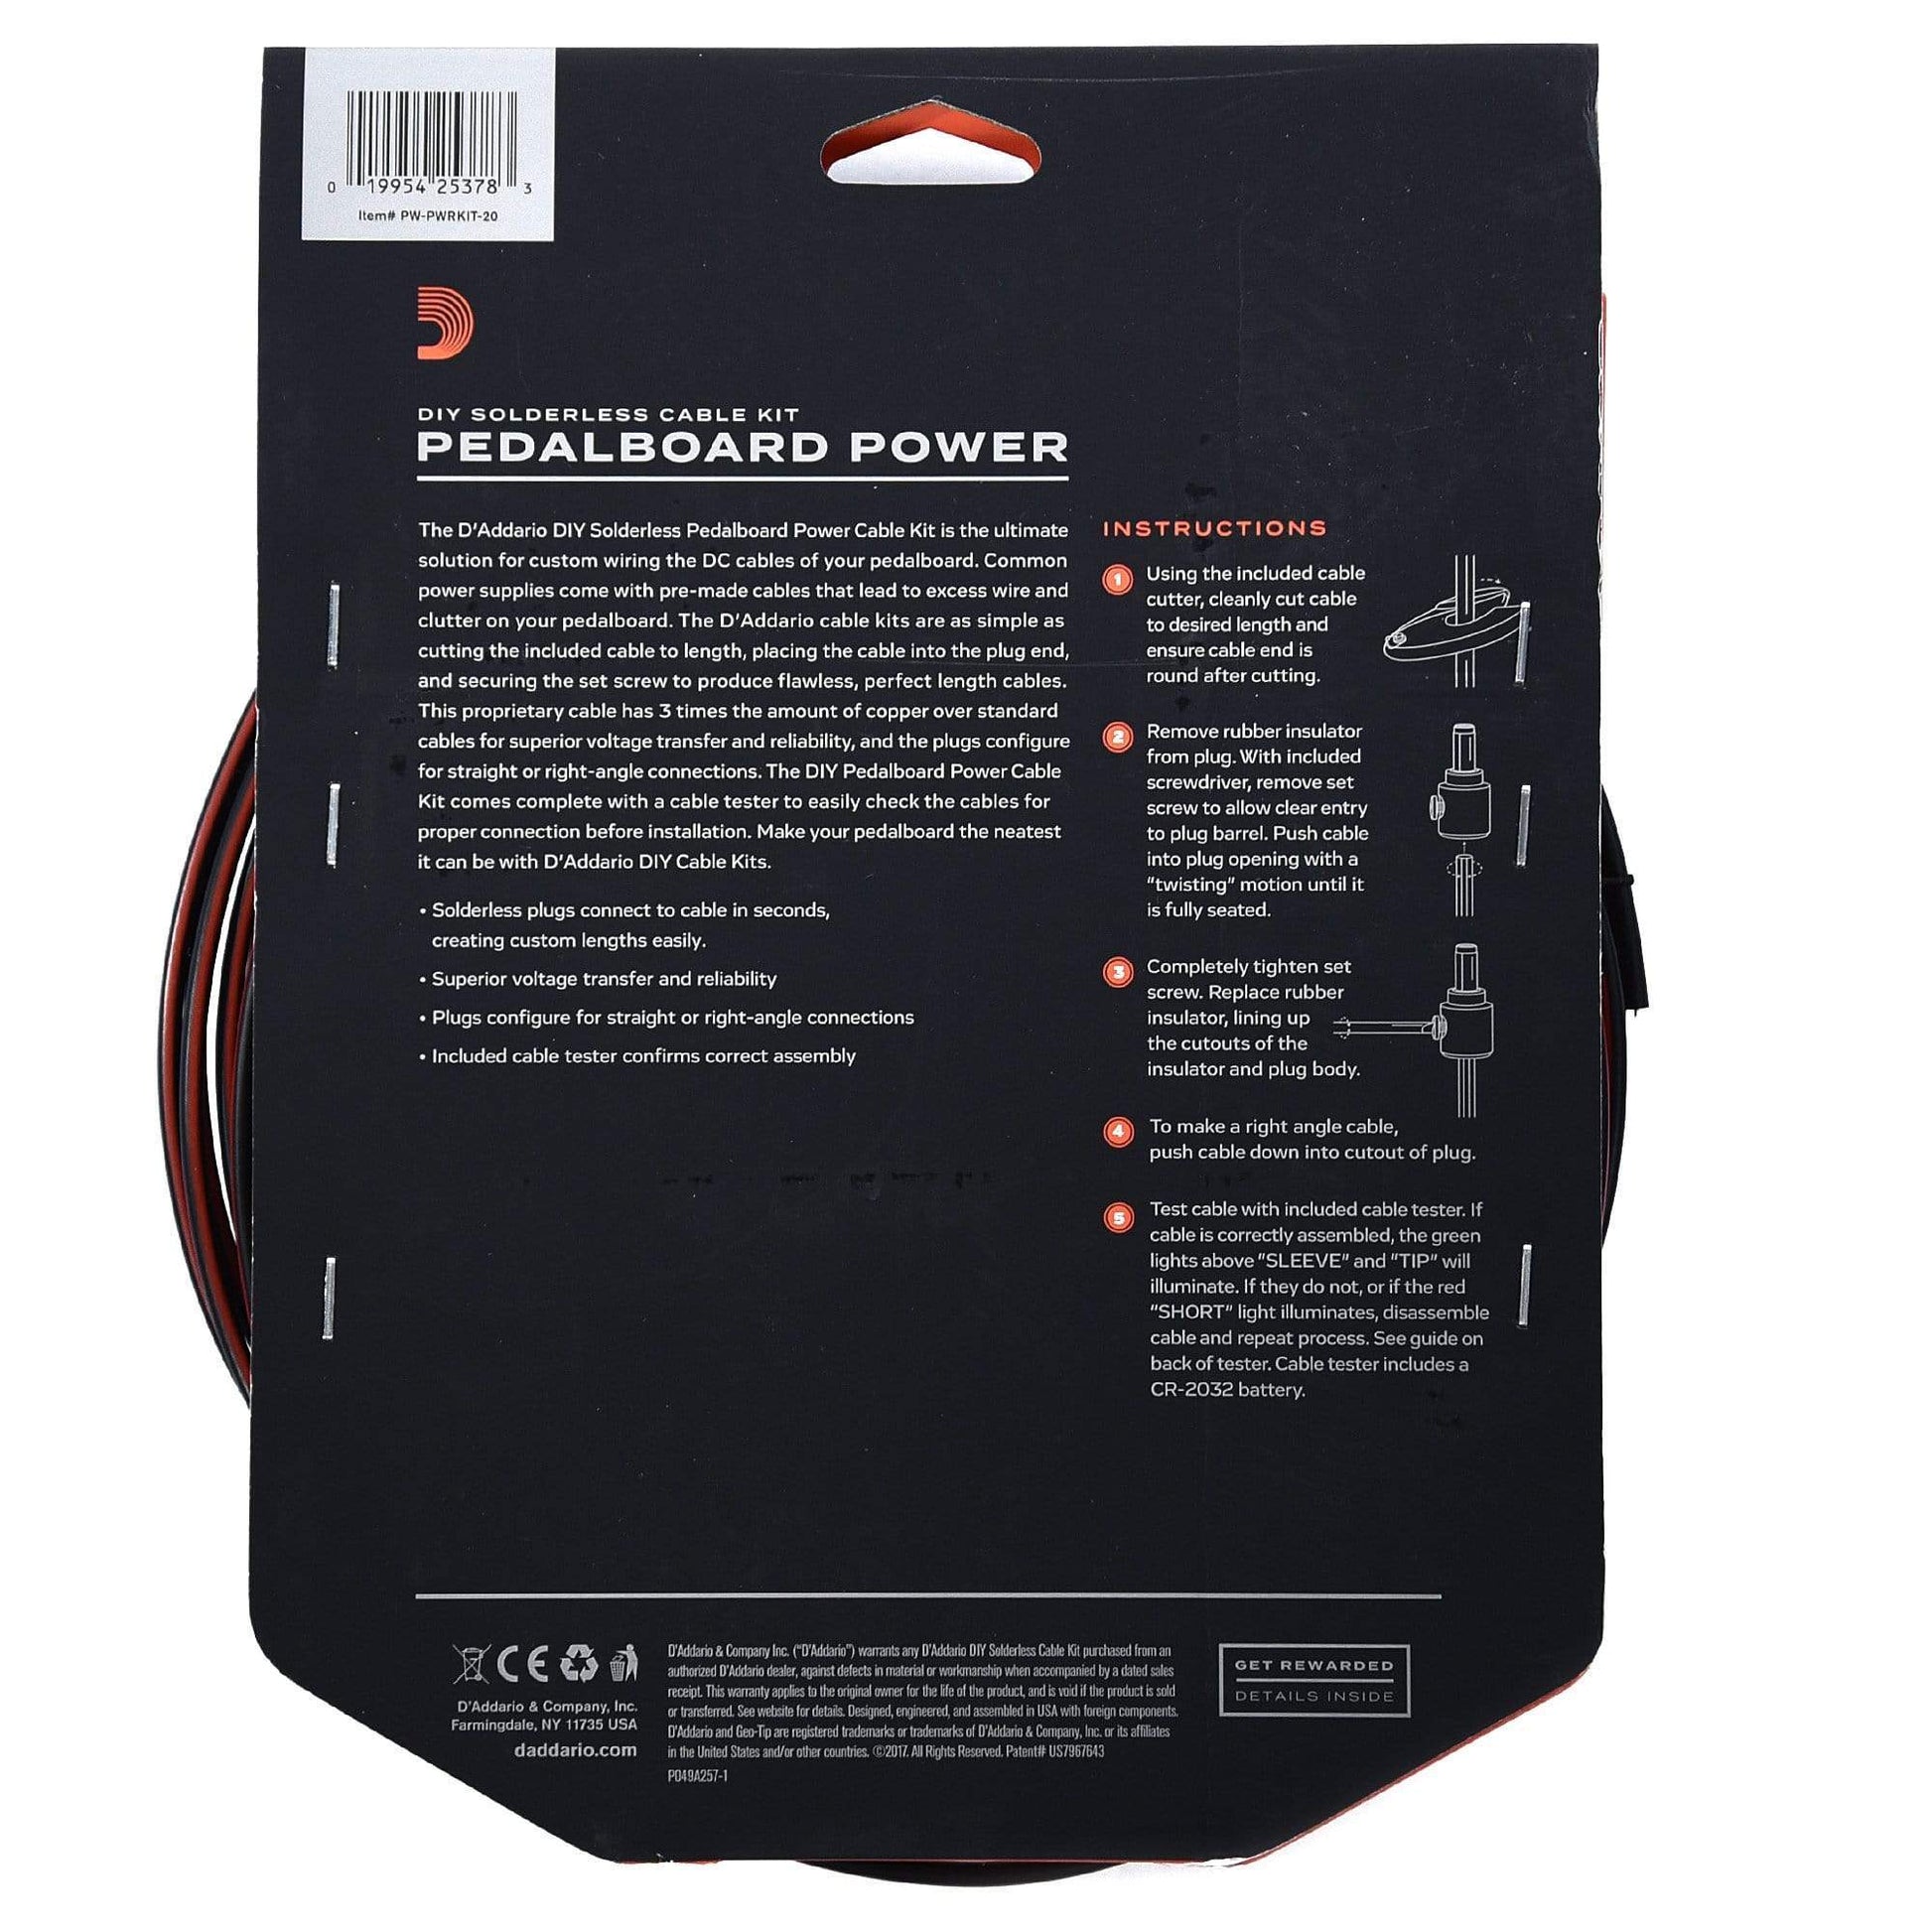 D'Addario DIY Solderless Pedalboard Power Cable Kit Accessories / Tools